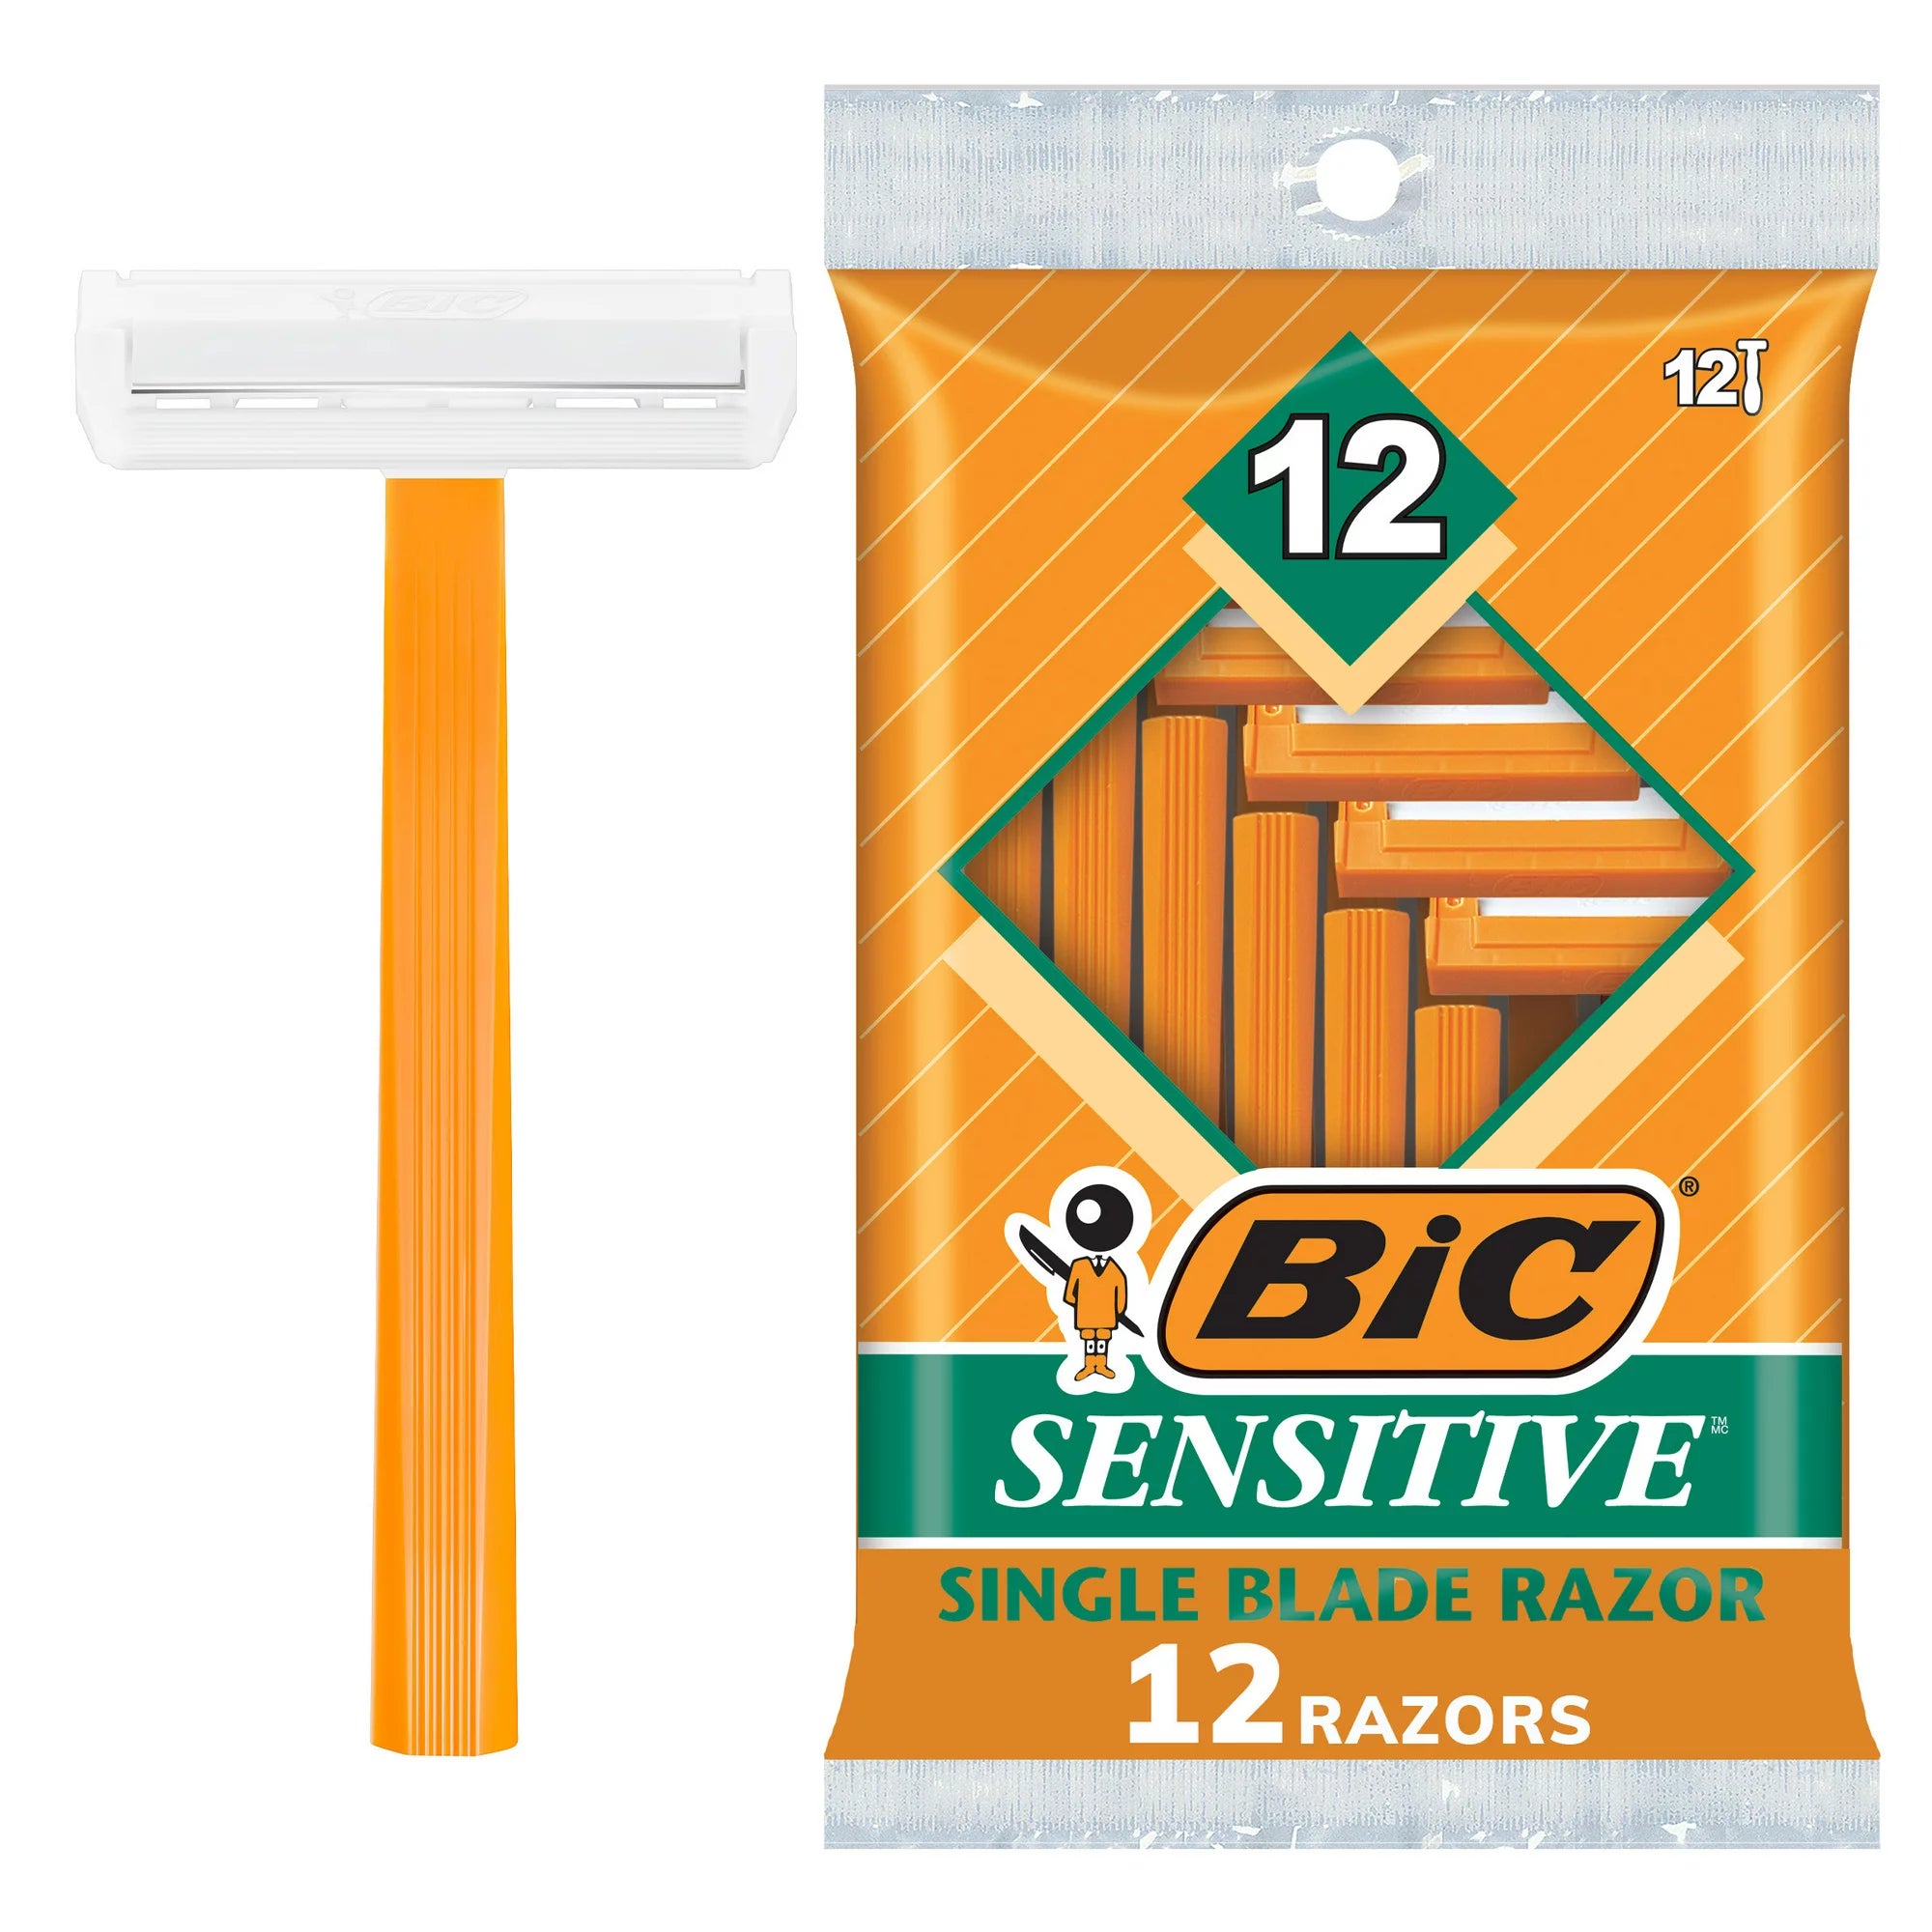 BIC Sensitive Shaver Men's Disposable Razor at Best Price - Halabh